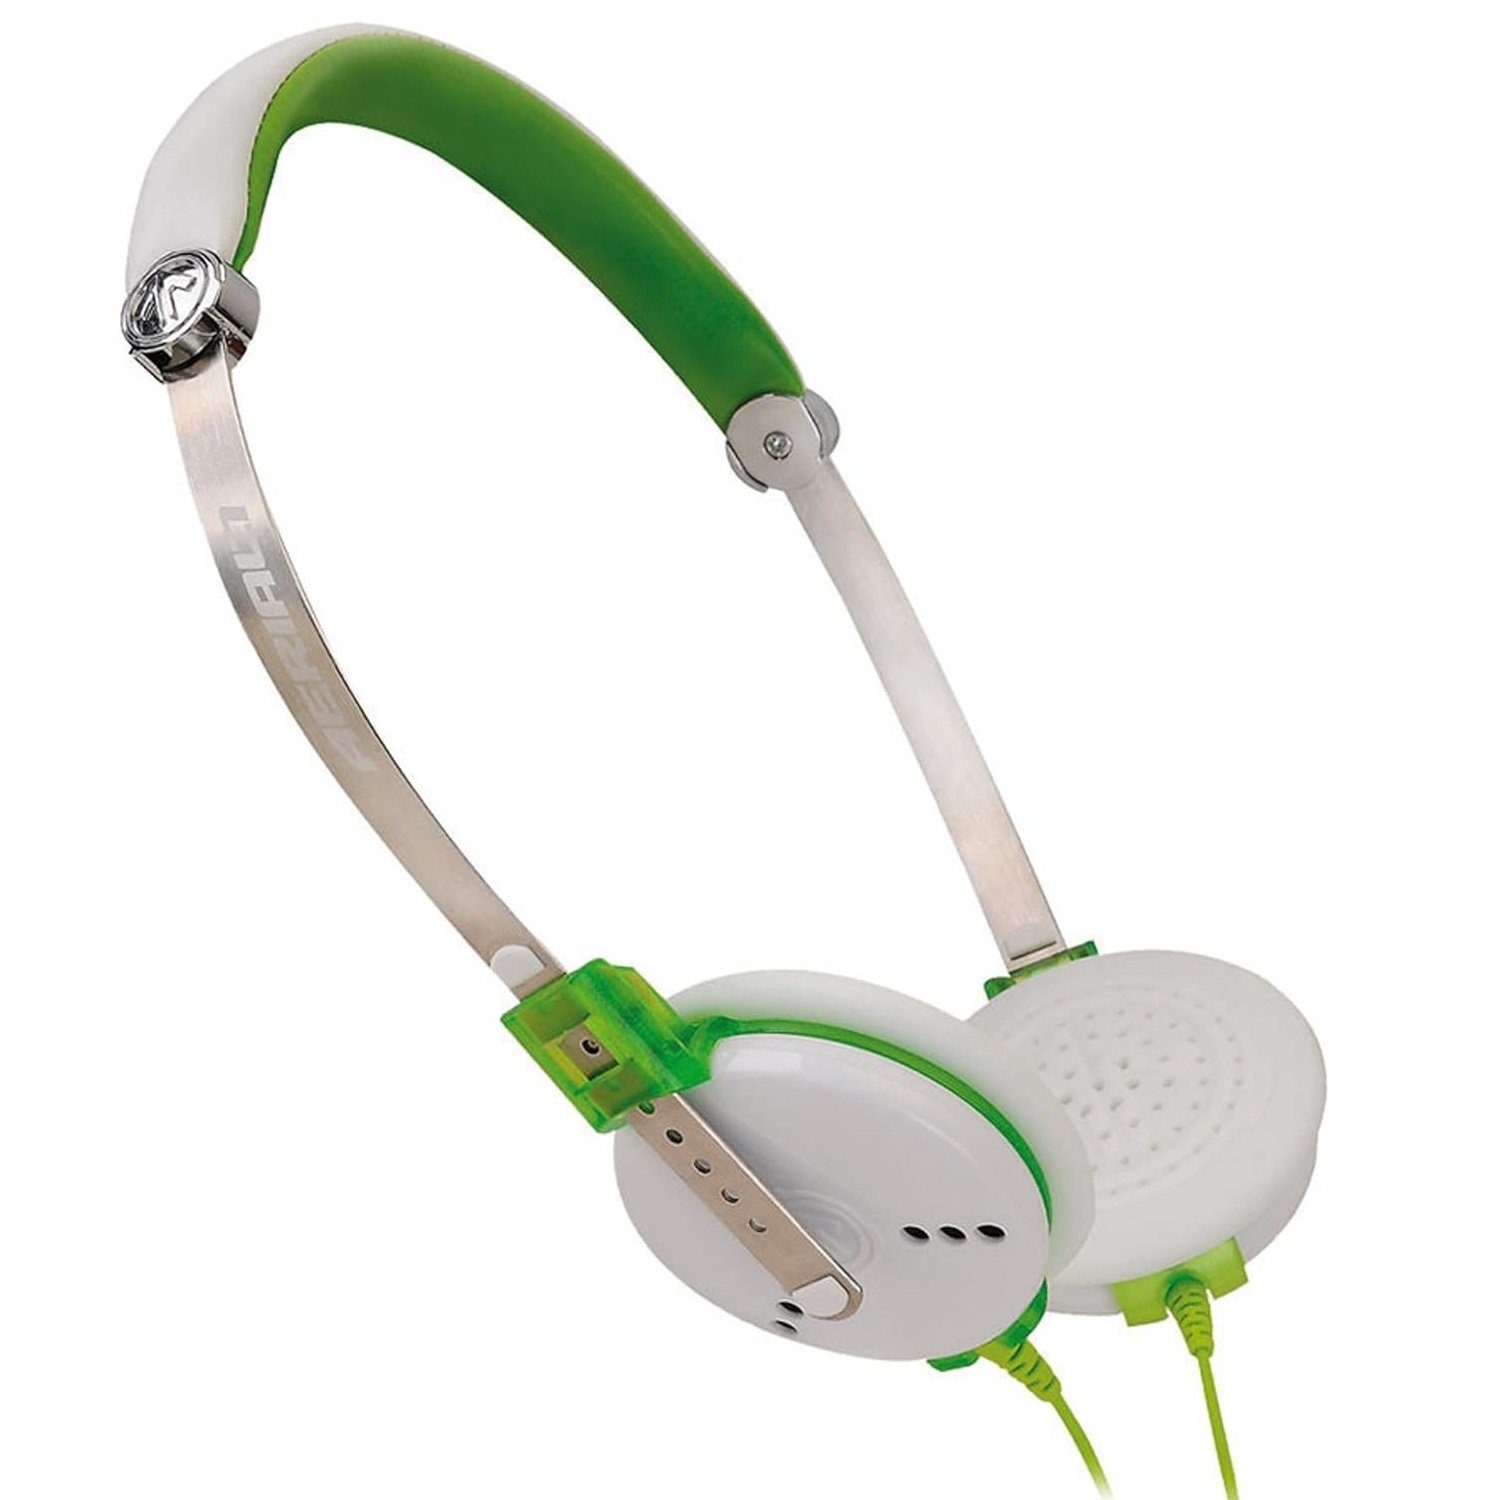 Aerial7 Fuse Kompakt Mikrofon + Stereo, Leicht) Kabel Headset (Mikrofon, Headset am On-Ear Sound-Disc Grün Mikrofon Kopfhörer